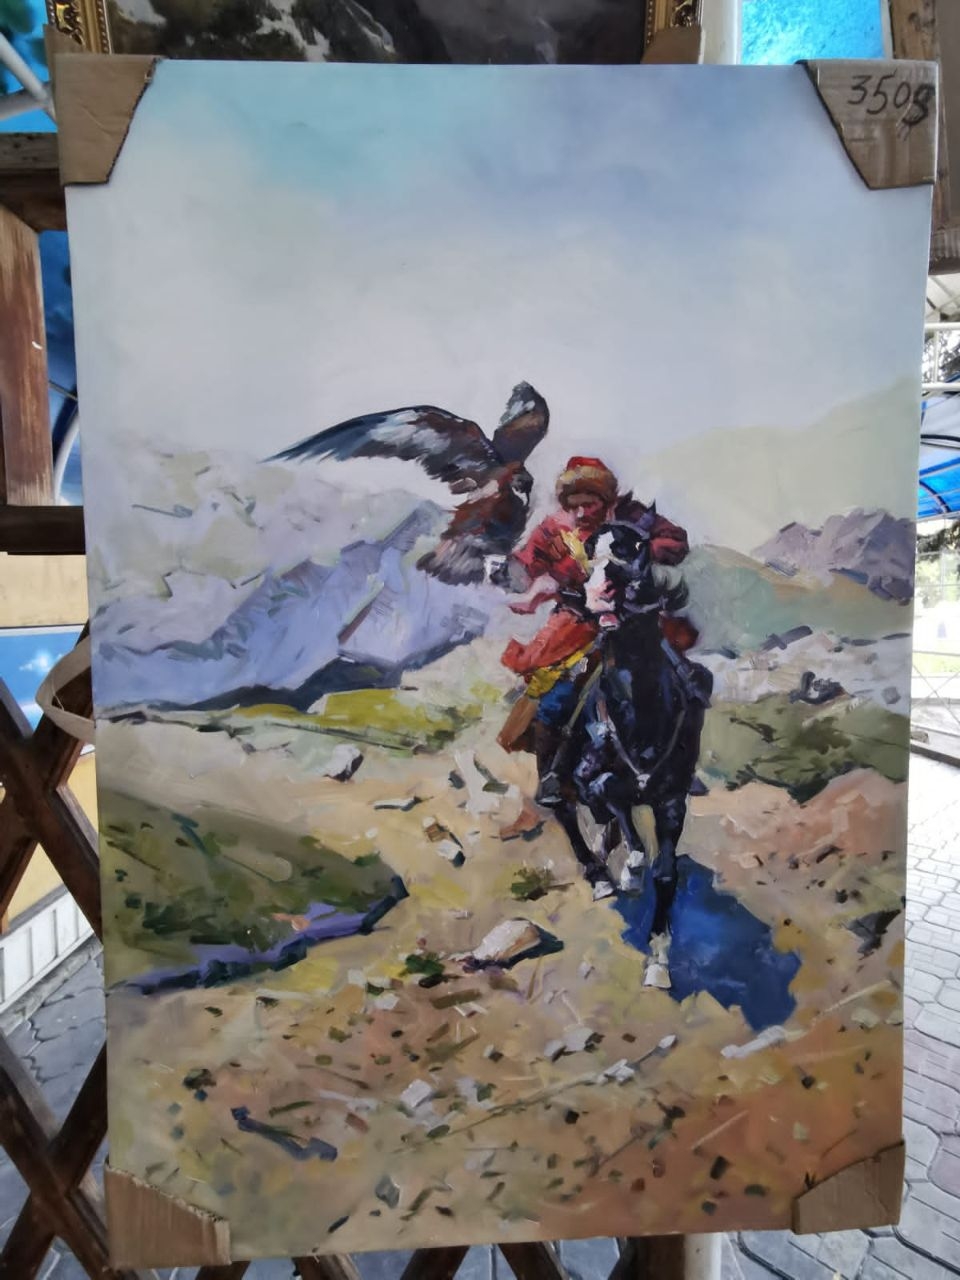 Бишкек: Биг Бен,кони,ЦУМ,картинная галерея,Ошский рынок.Ч93 Бишкек, Киргизия